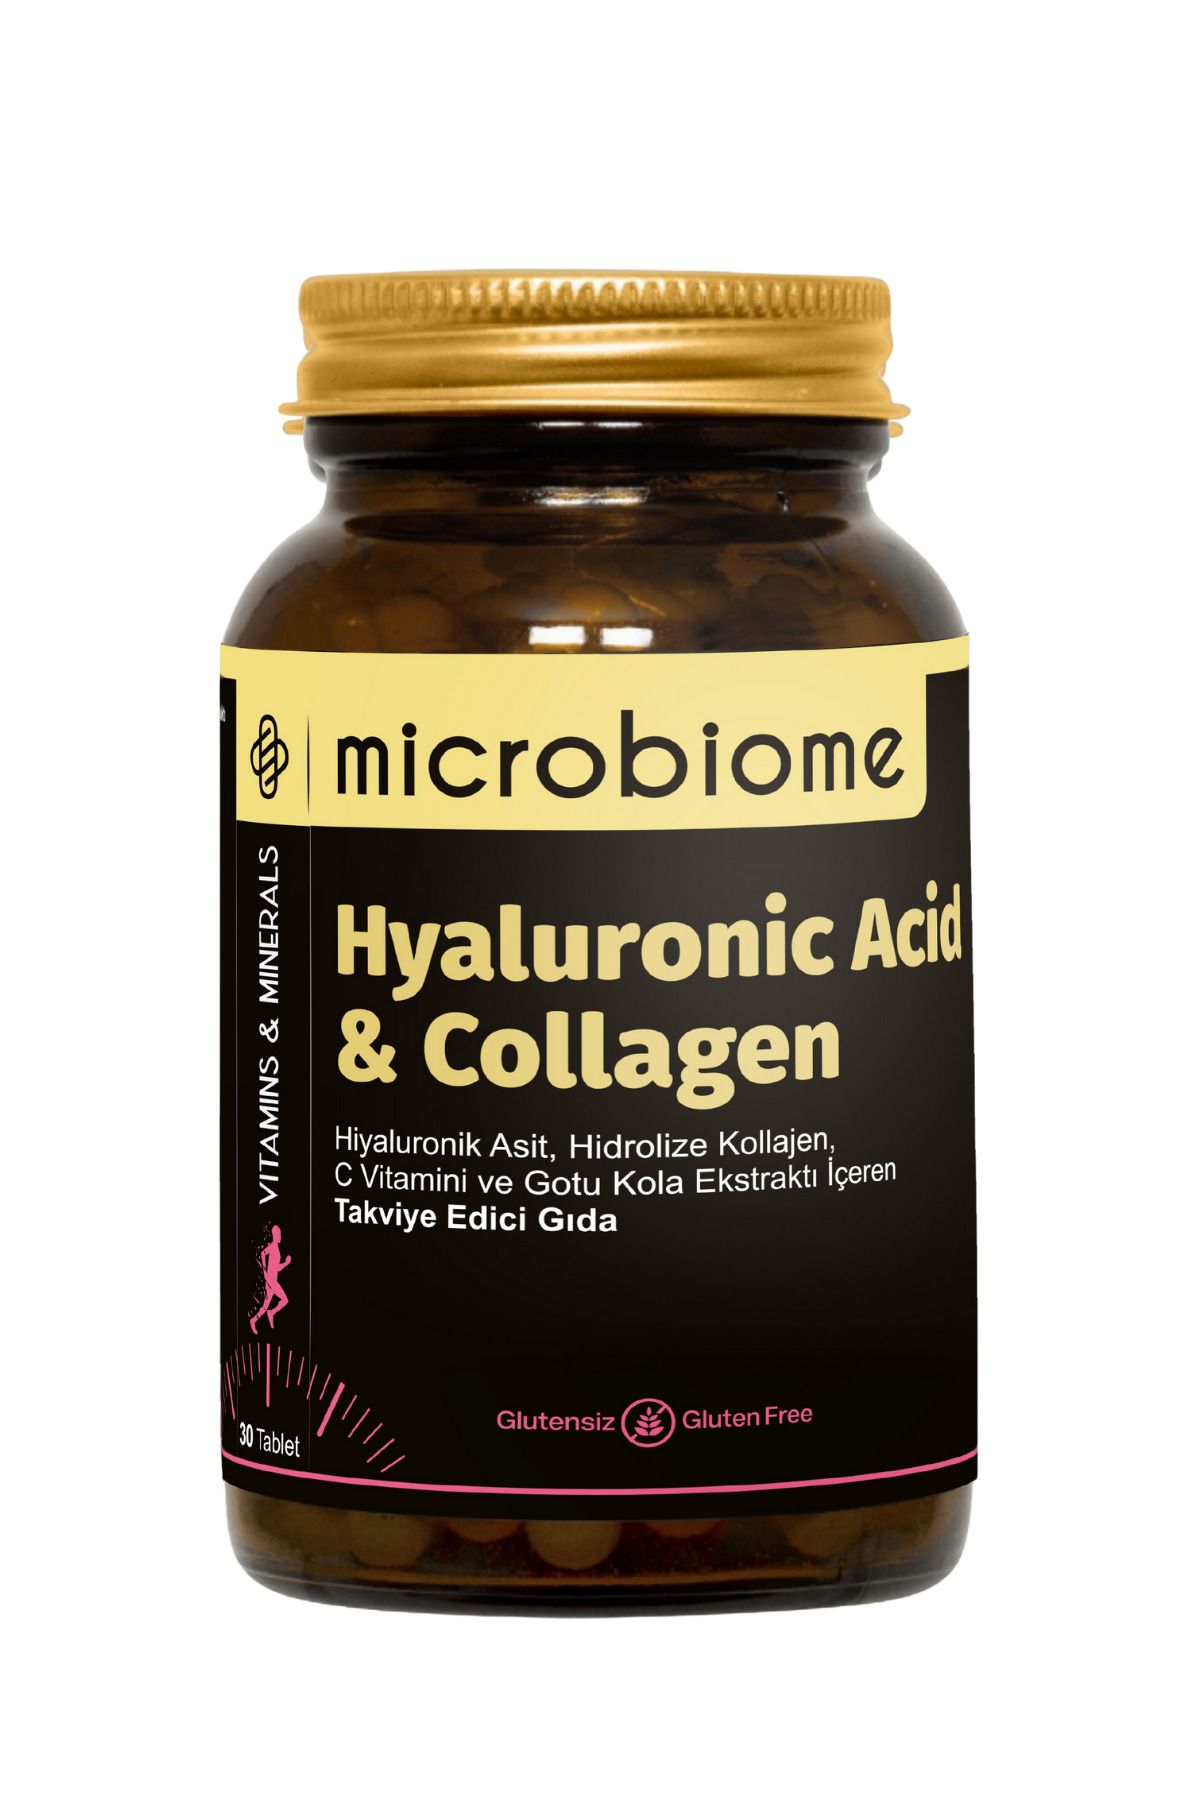 Microbiome Collagen & Hyaluronic Acid 30 Tablet (HİYALURONİK ASİT, HİDROLİZE KOLAJEN, C VİTAMİNİ VE GOTU KOLA)